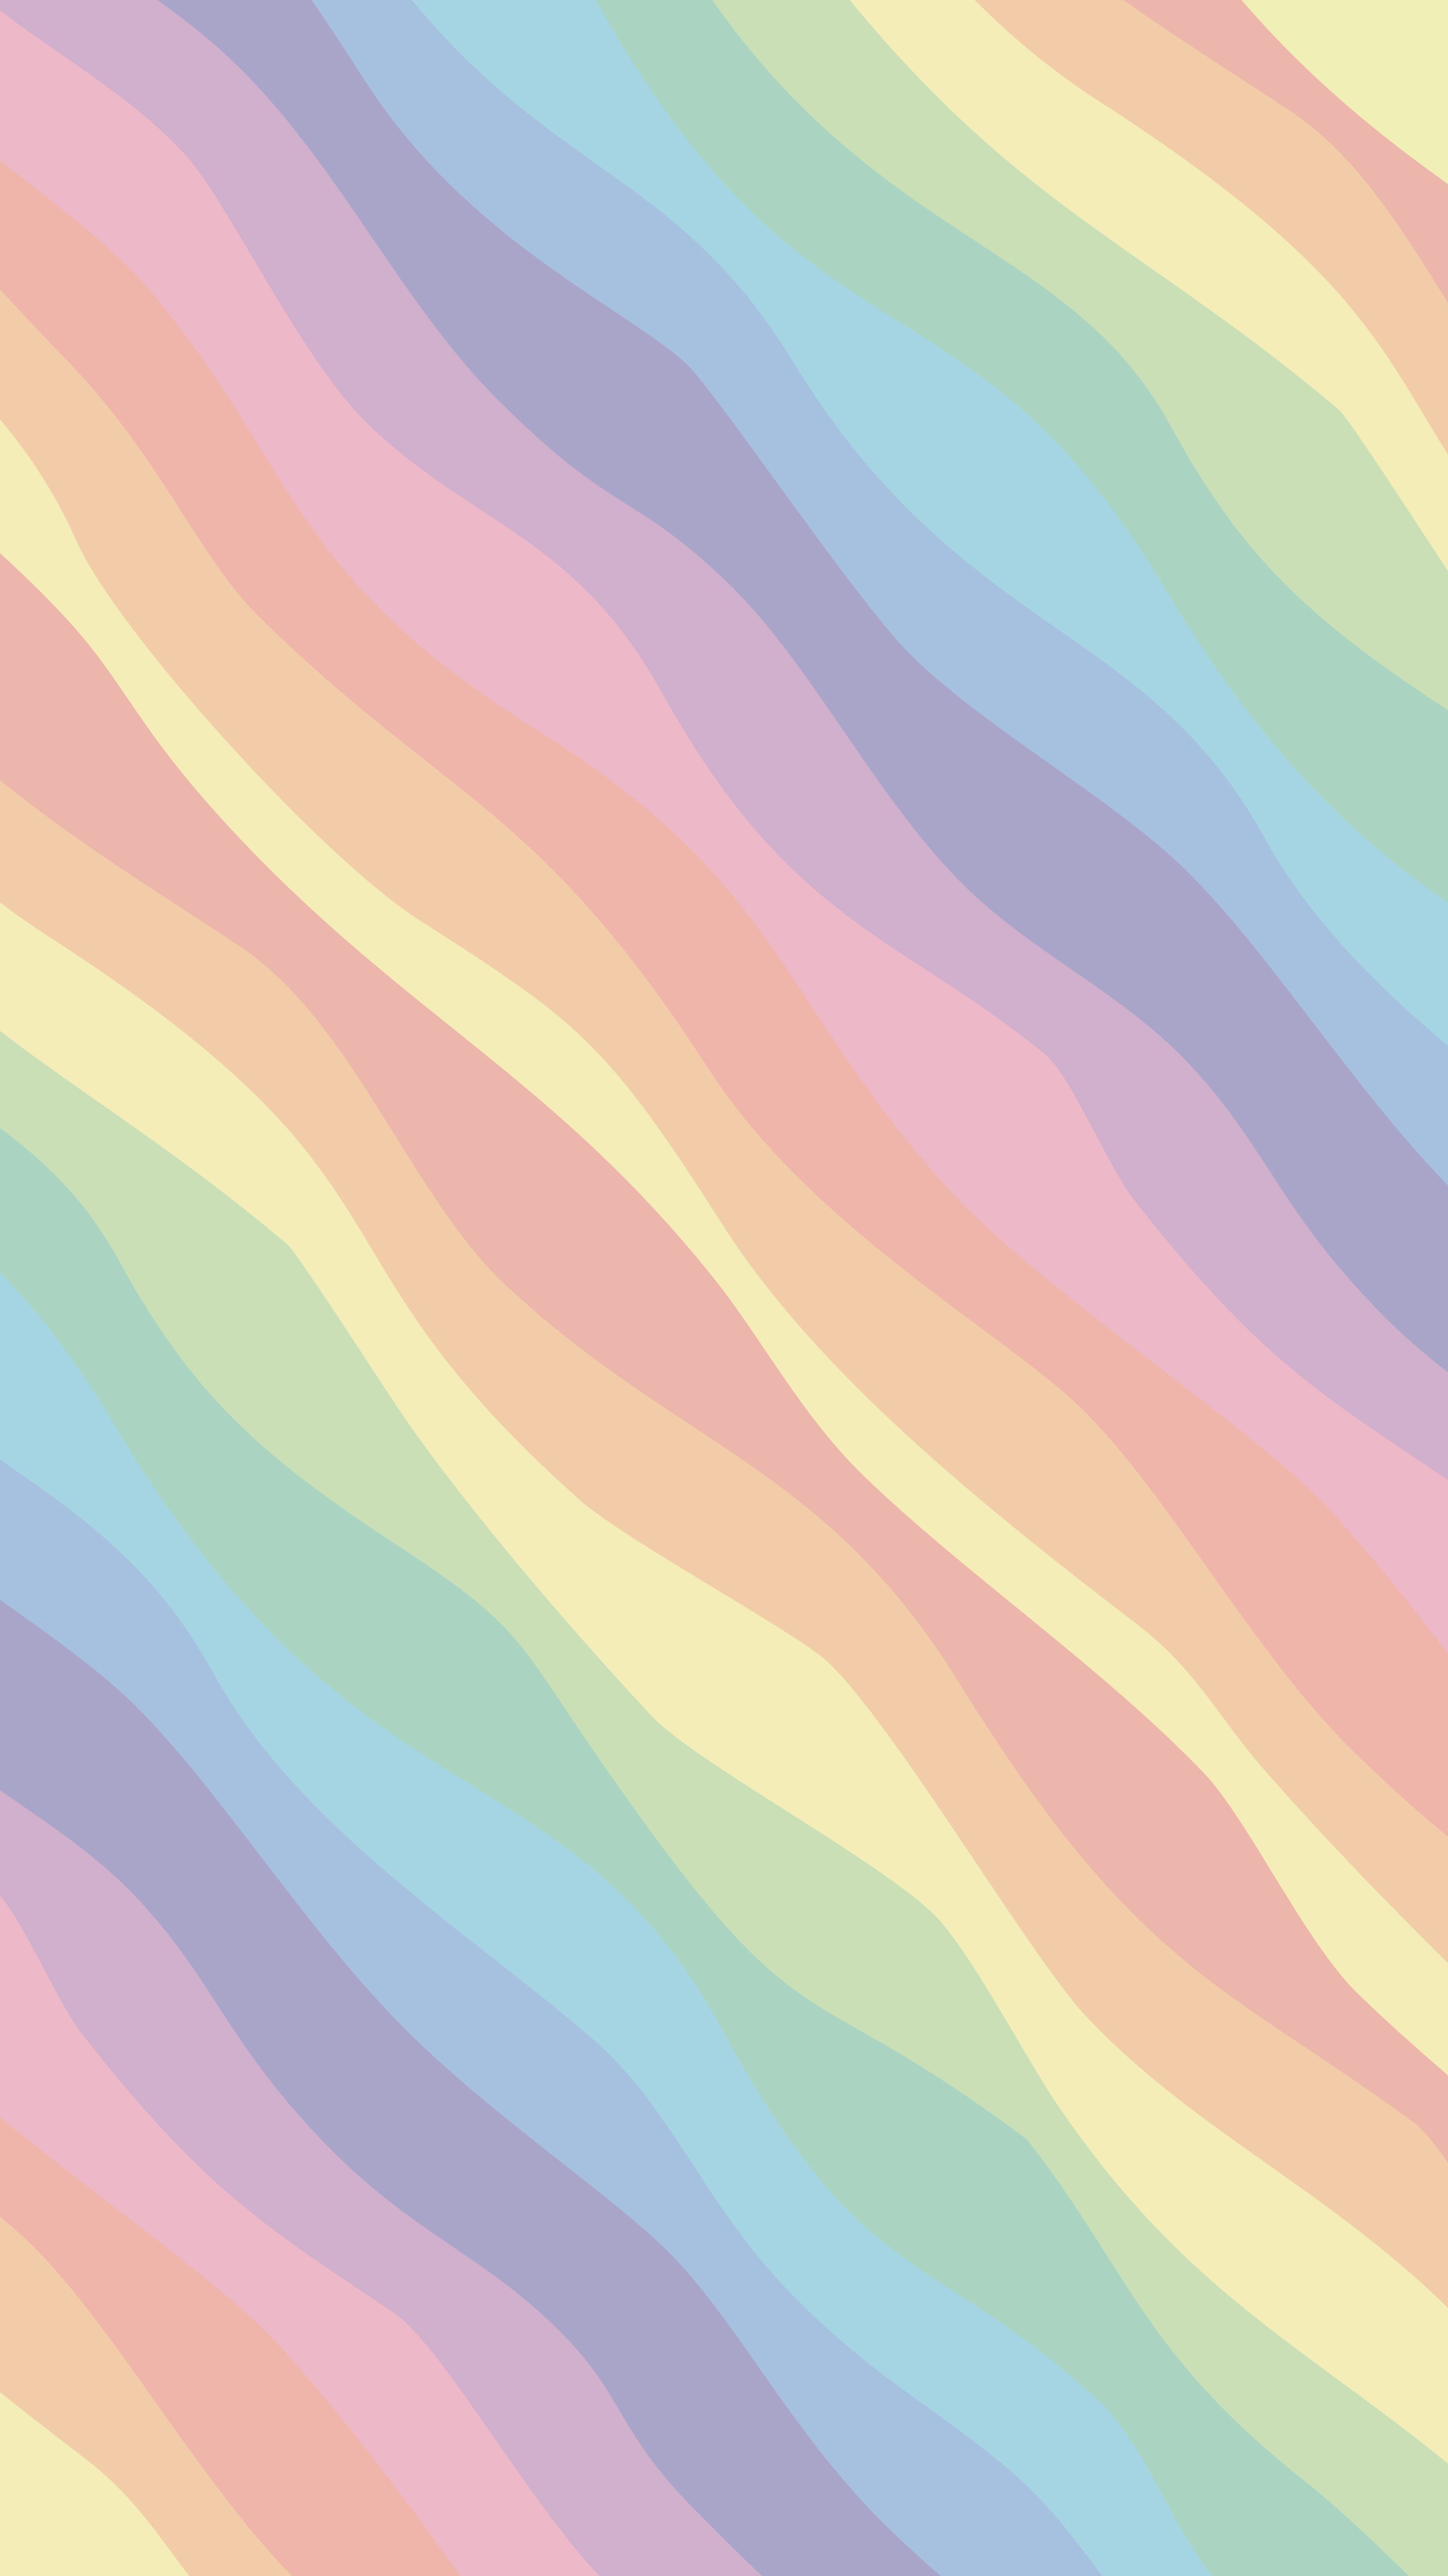 A wavy rainbow pattern in a pastel color scheme. - Pastel rainbow